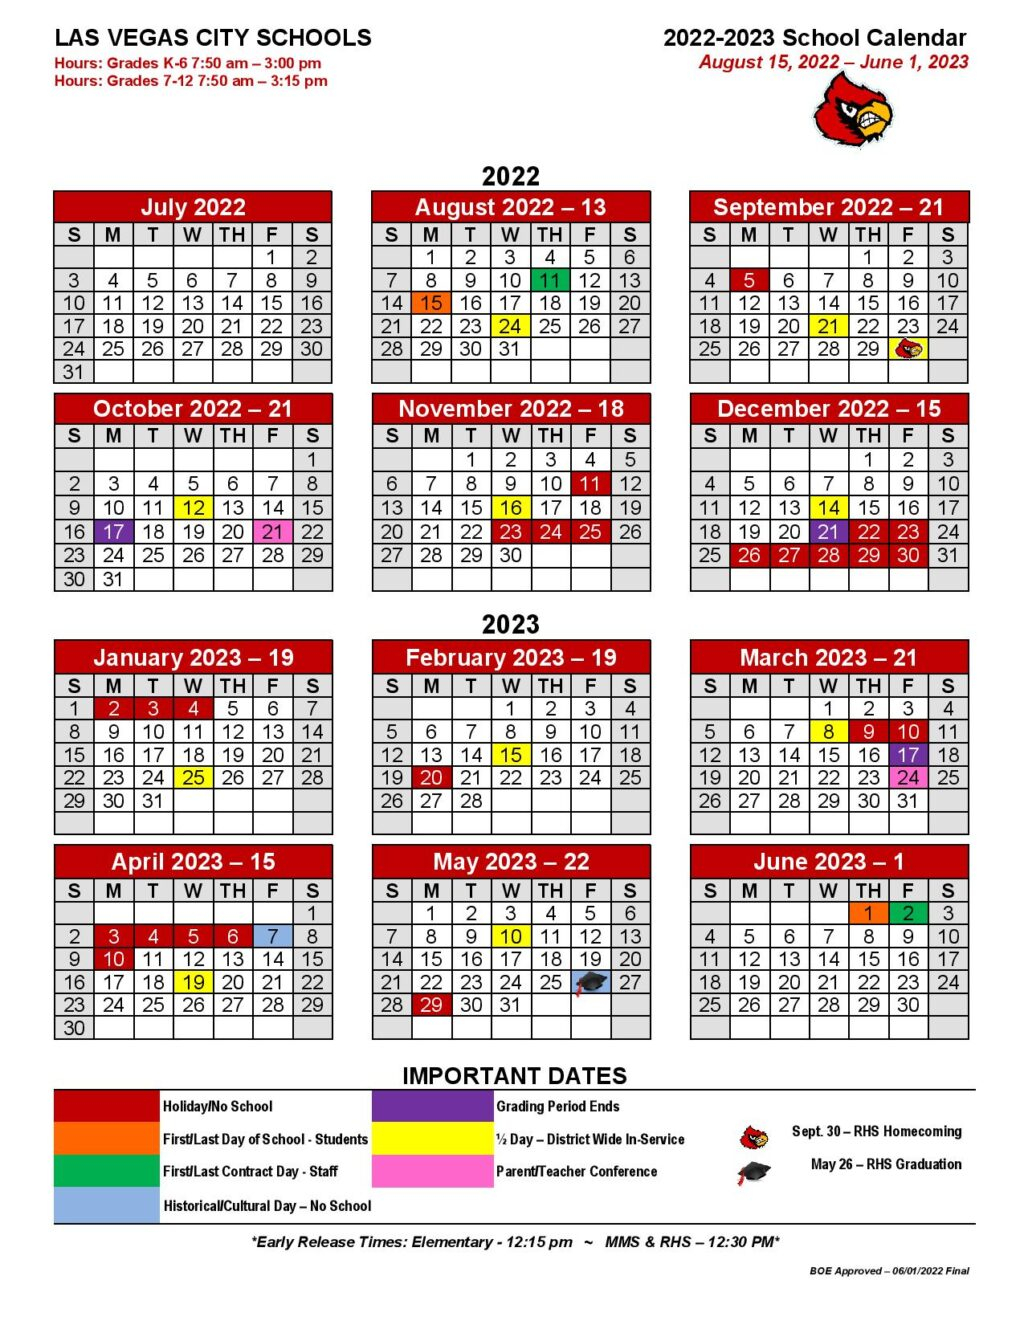 Las Vegas Sports Calendar Edith Gwenore